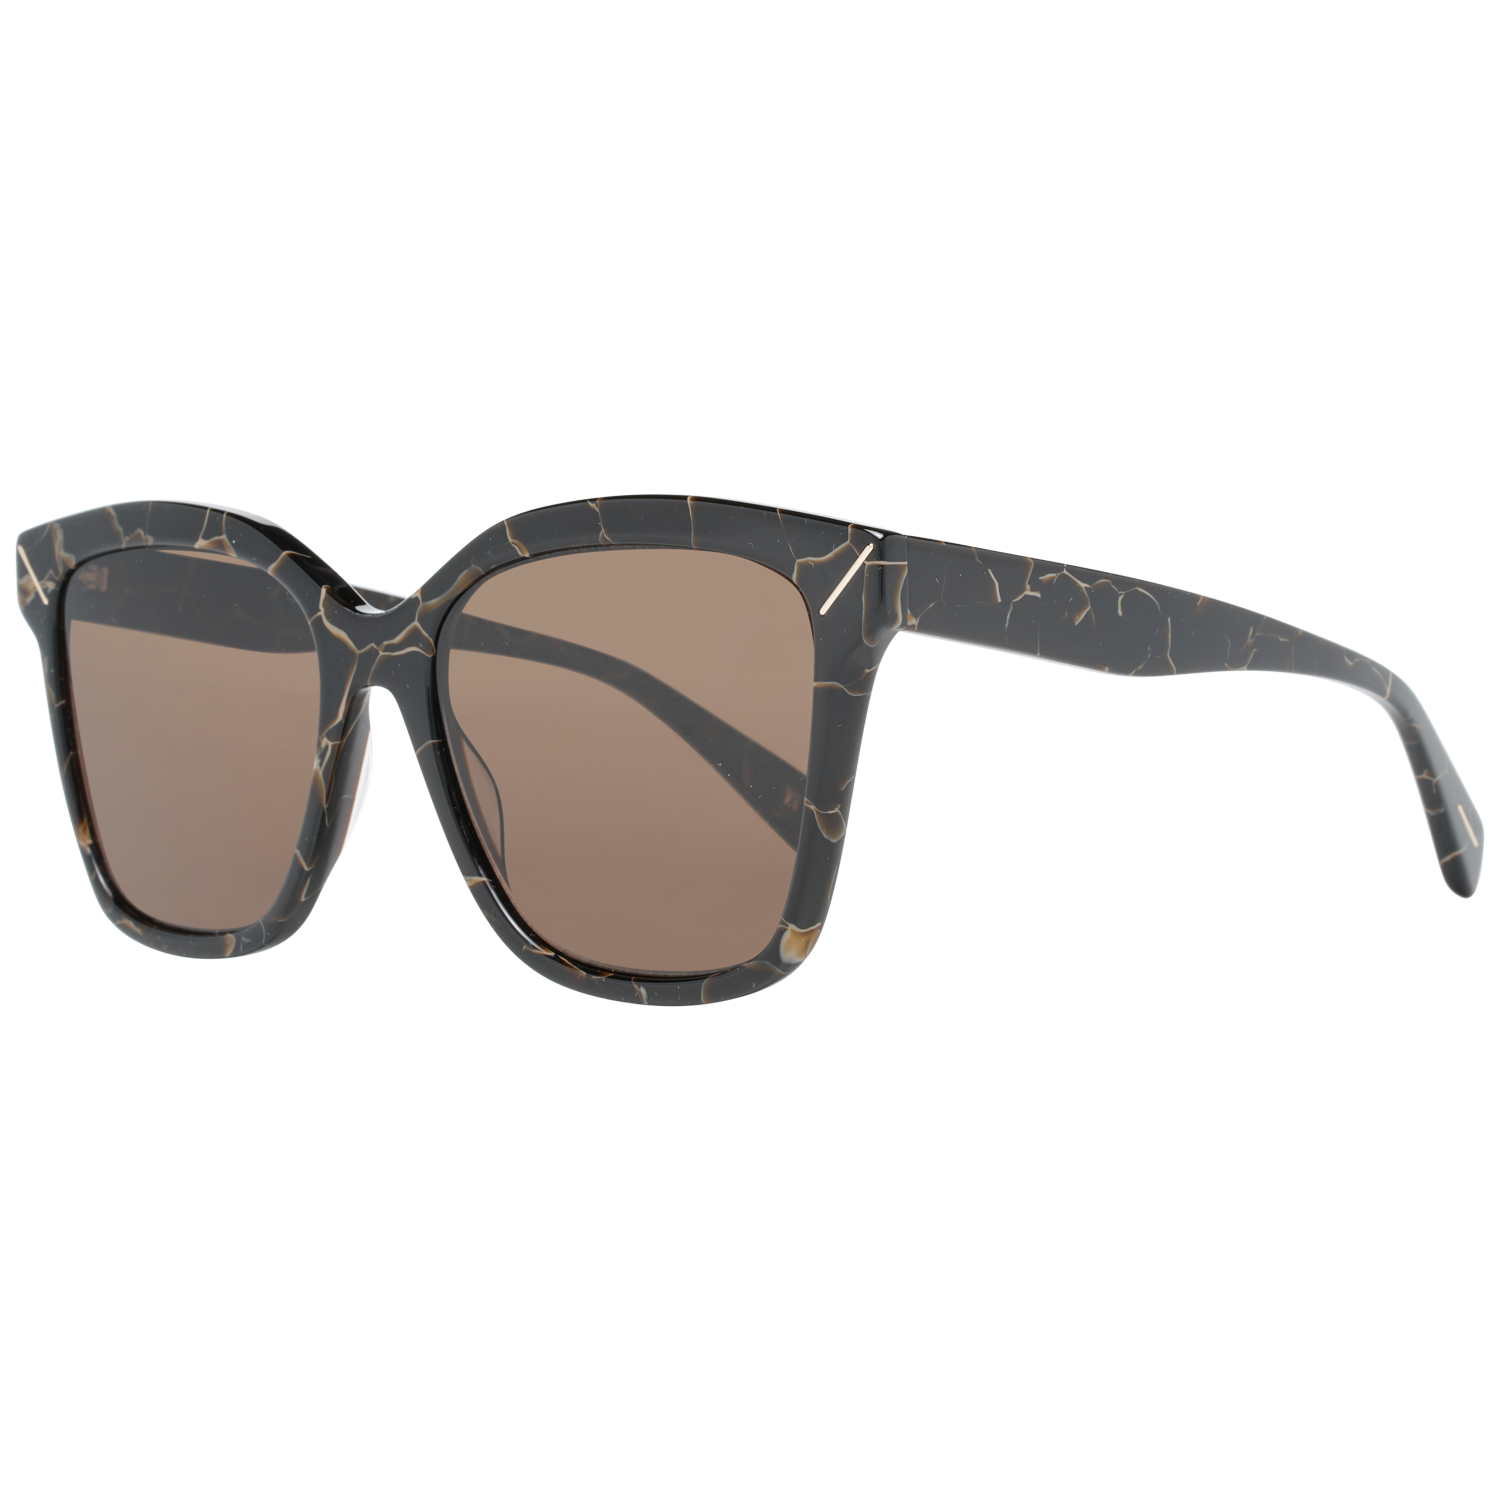 Yohji Yamamoto Sunglasses YS5002 134 55 Brown